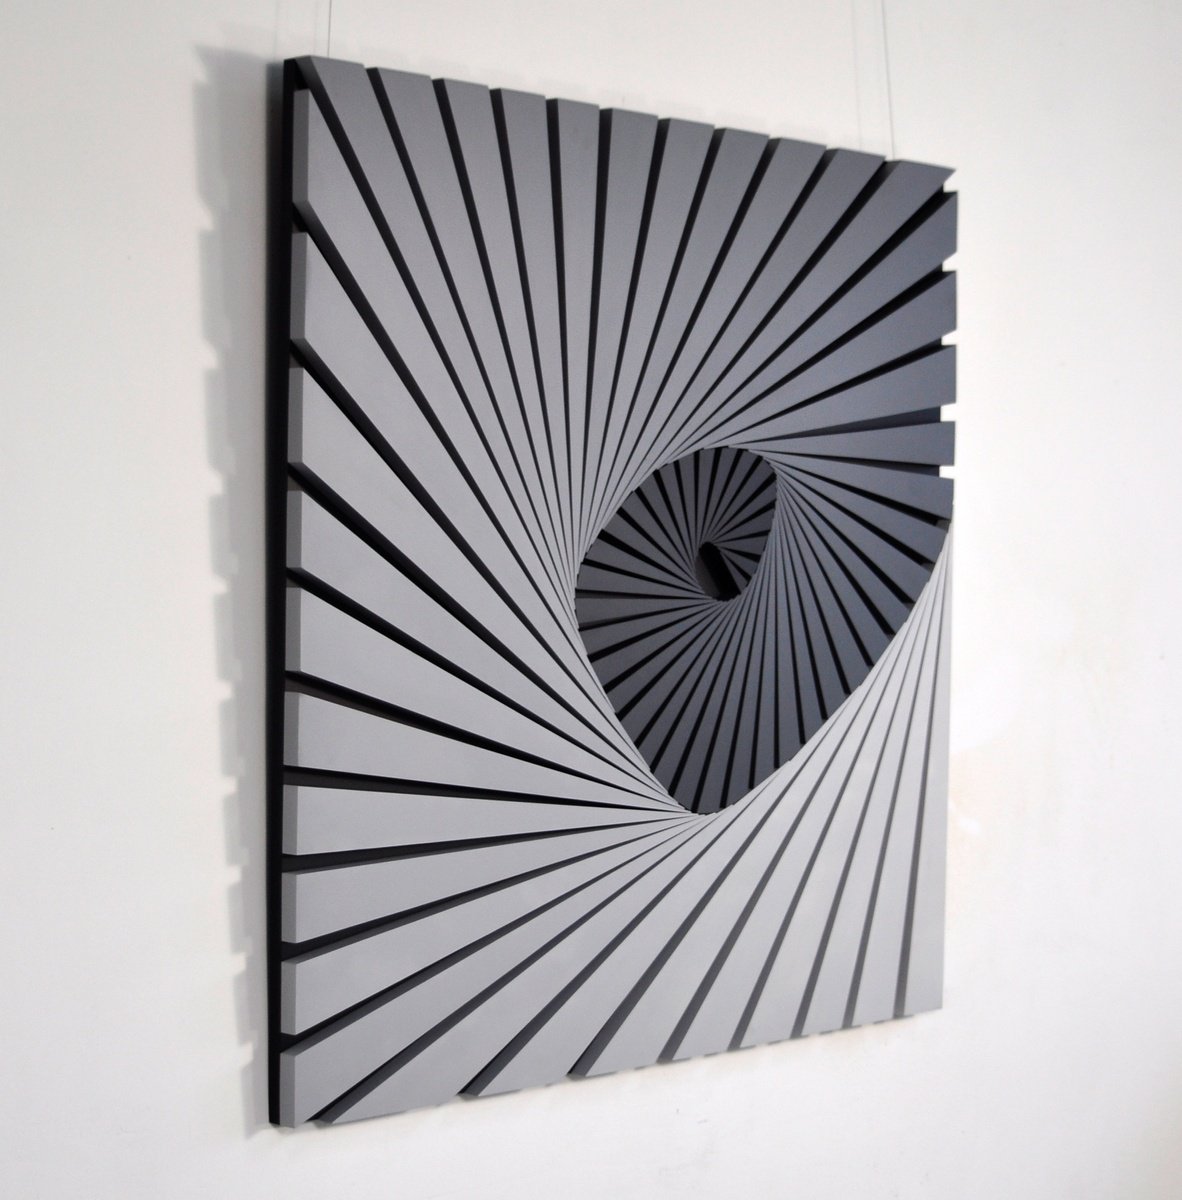 Domino effect (monochrome) by Dmytro Shavala